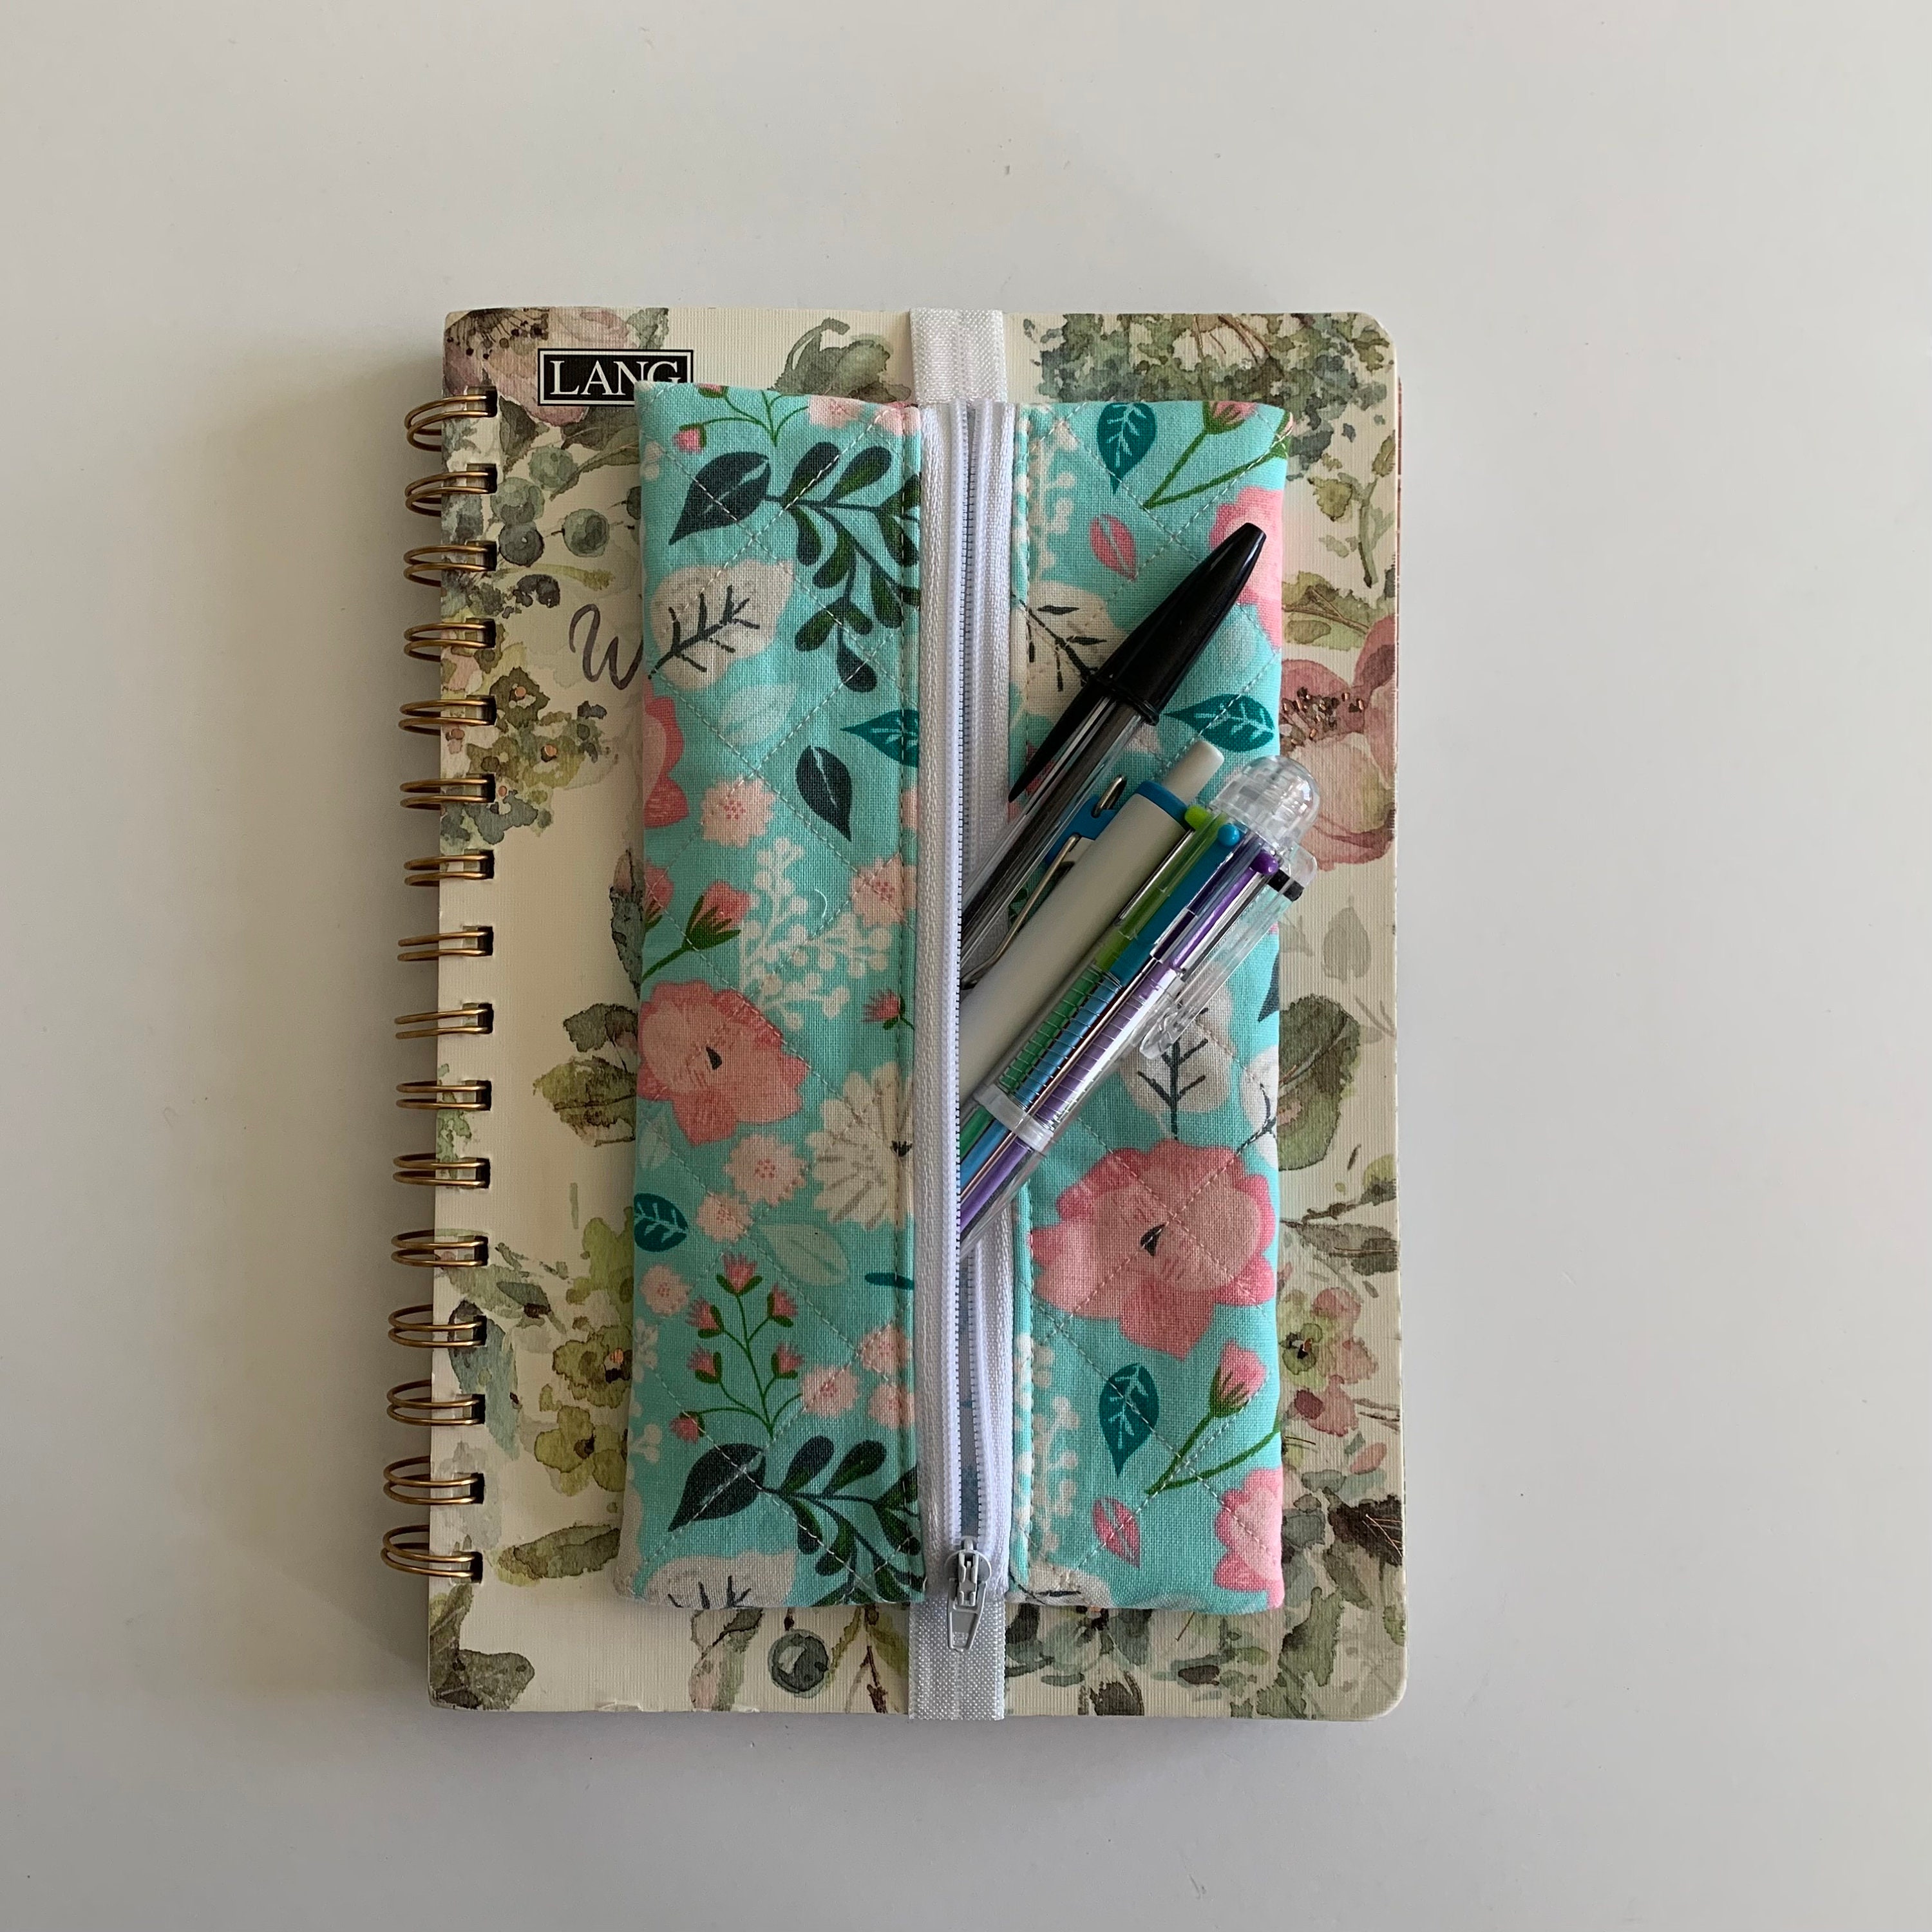 Mr. Pen Adjustable Elastic Pen Holder for Notebooks, Planners and Journals